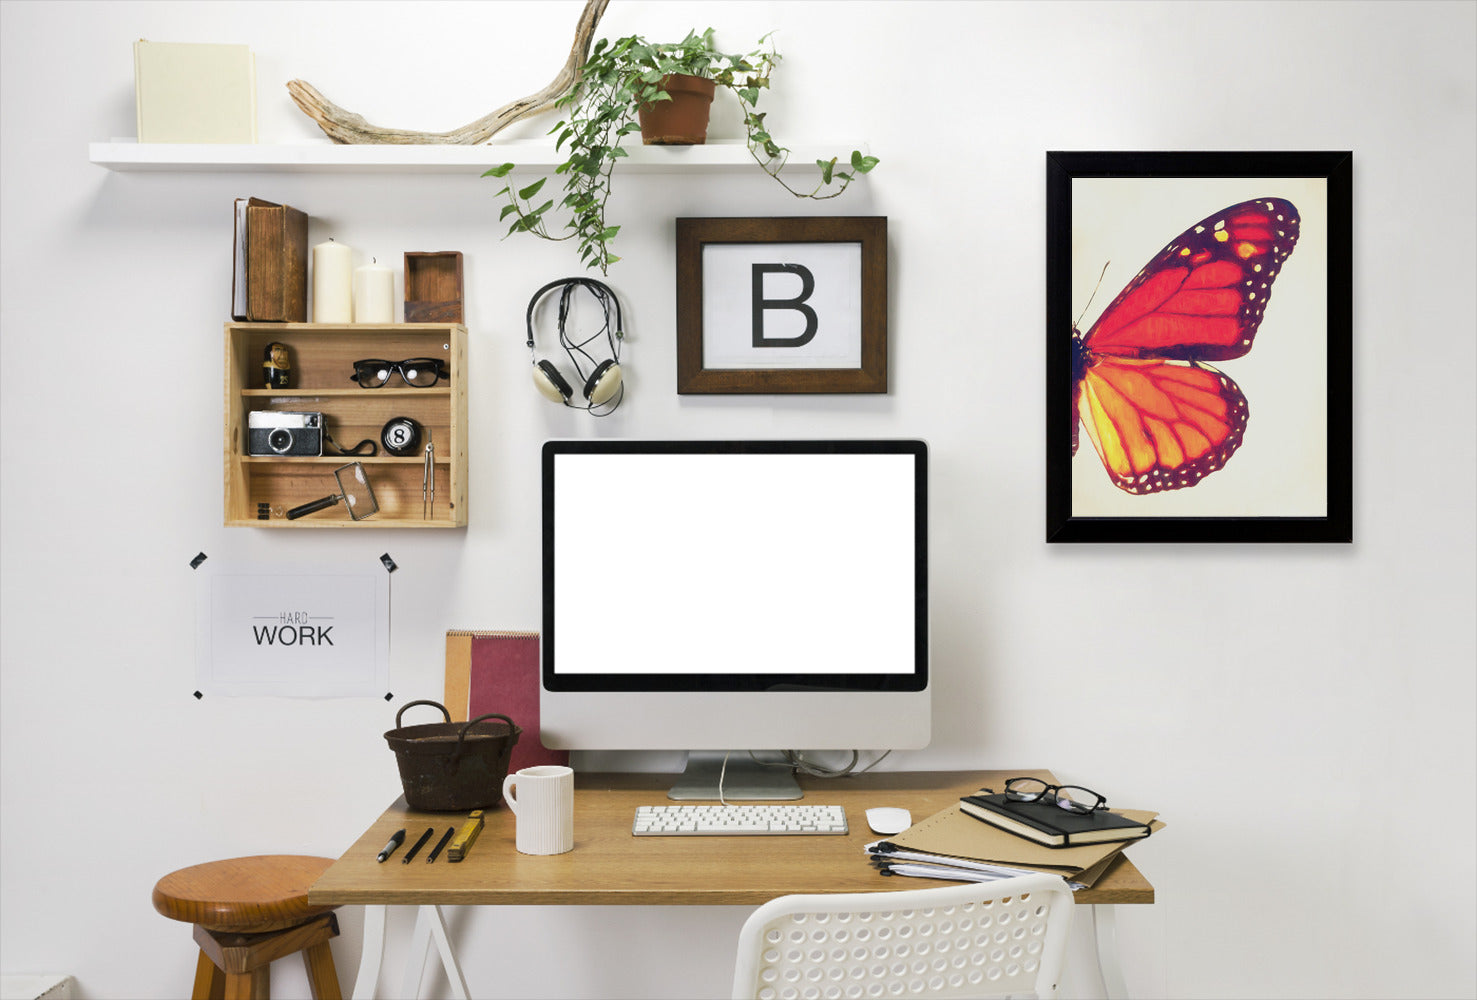 Monarch Butterfly Ii By Chaos & Wonder Design - Black Framed Print - Wall Art - Americanflat